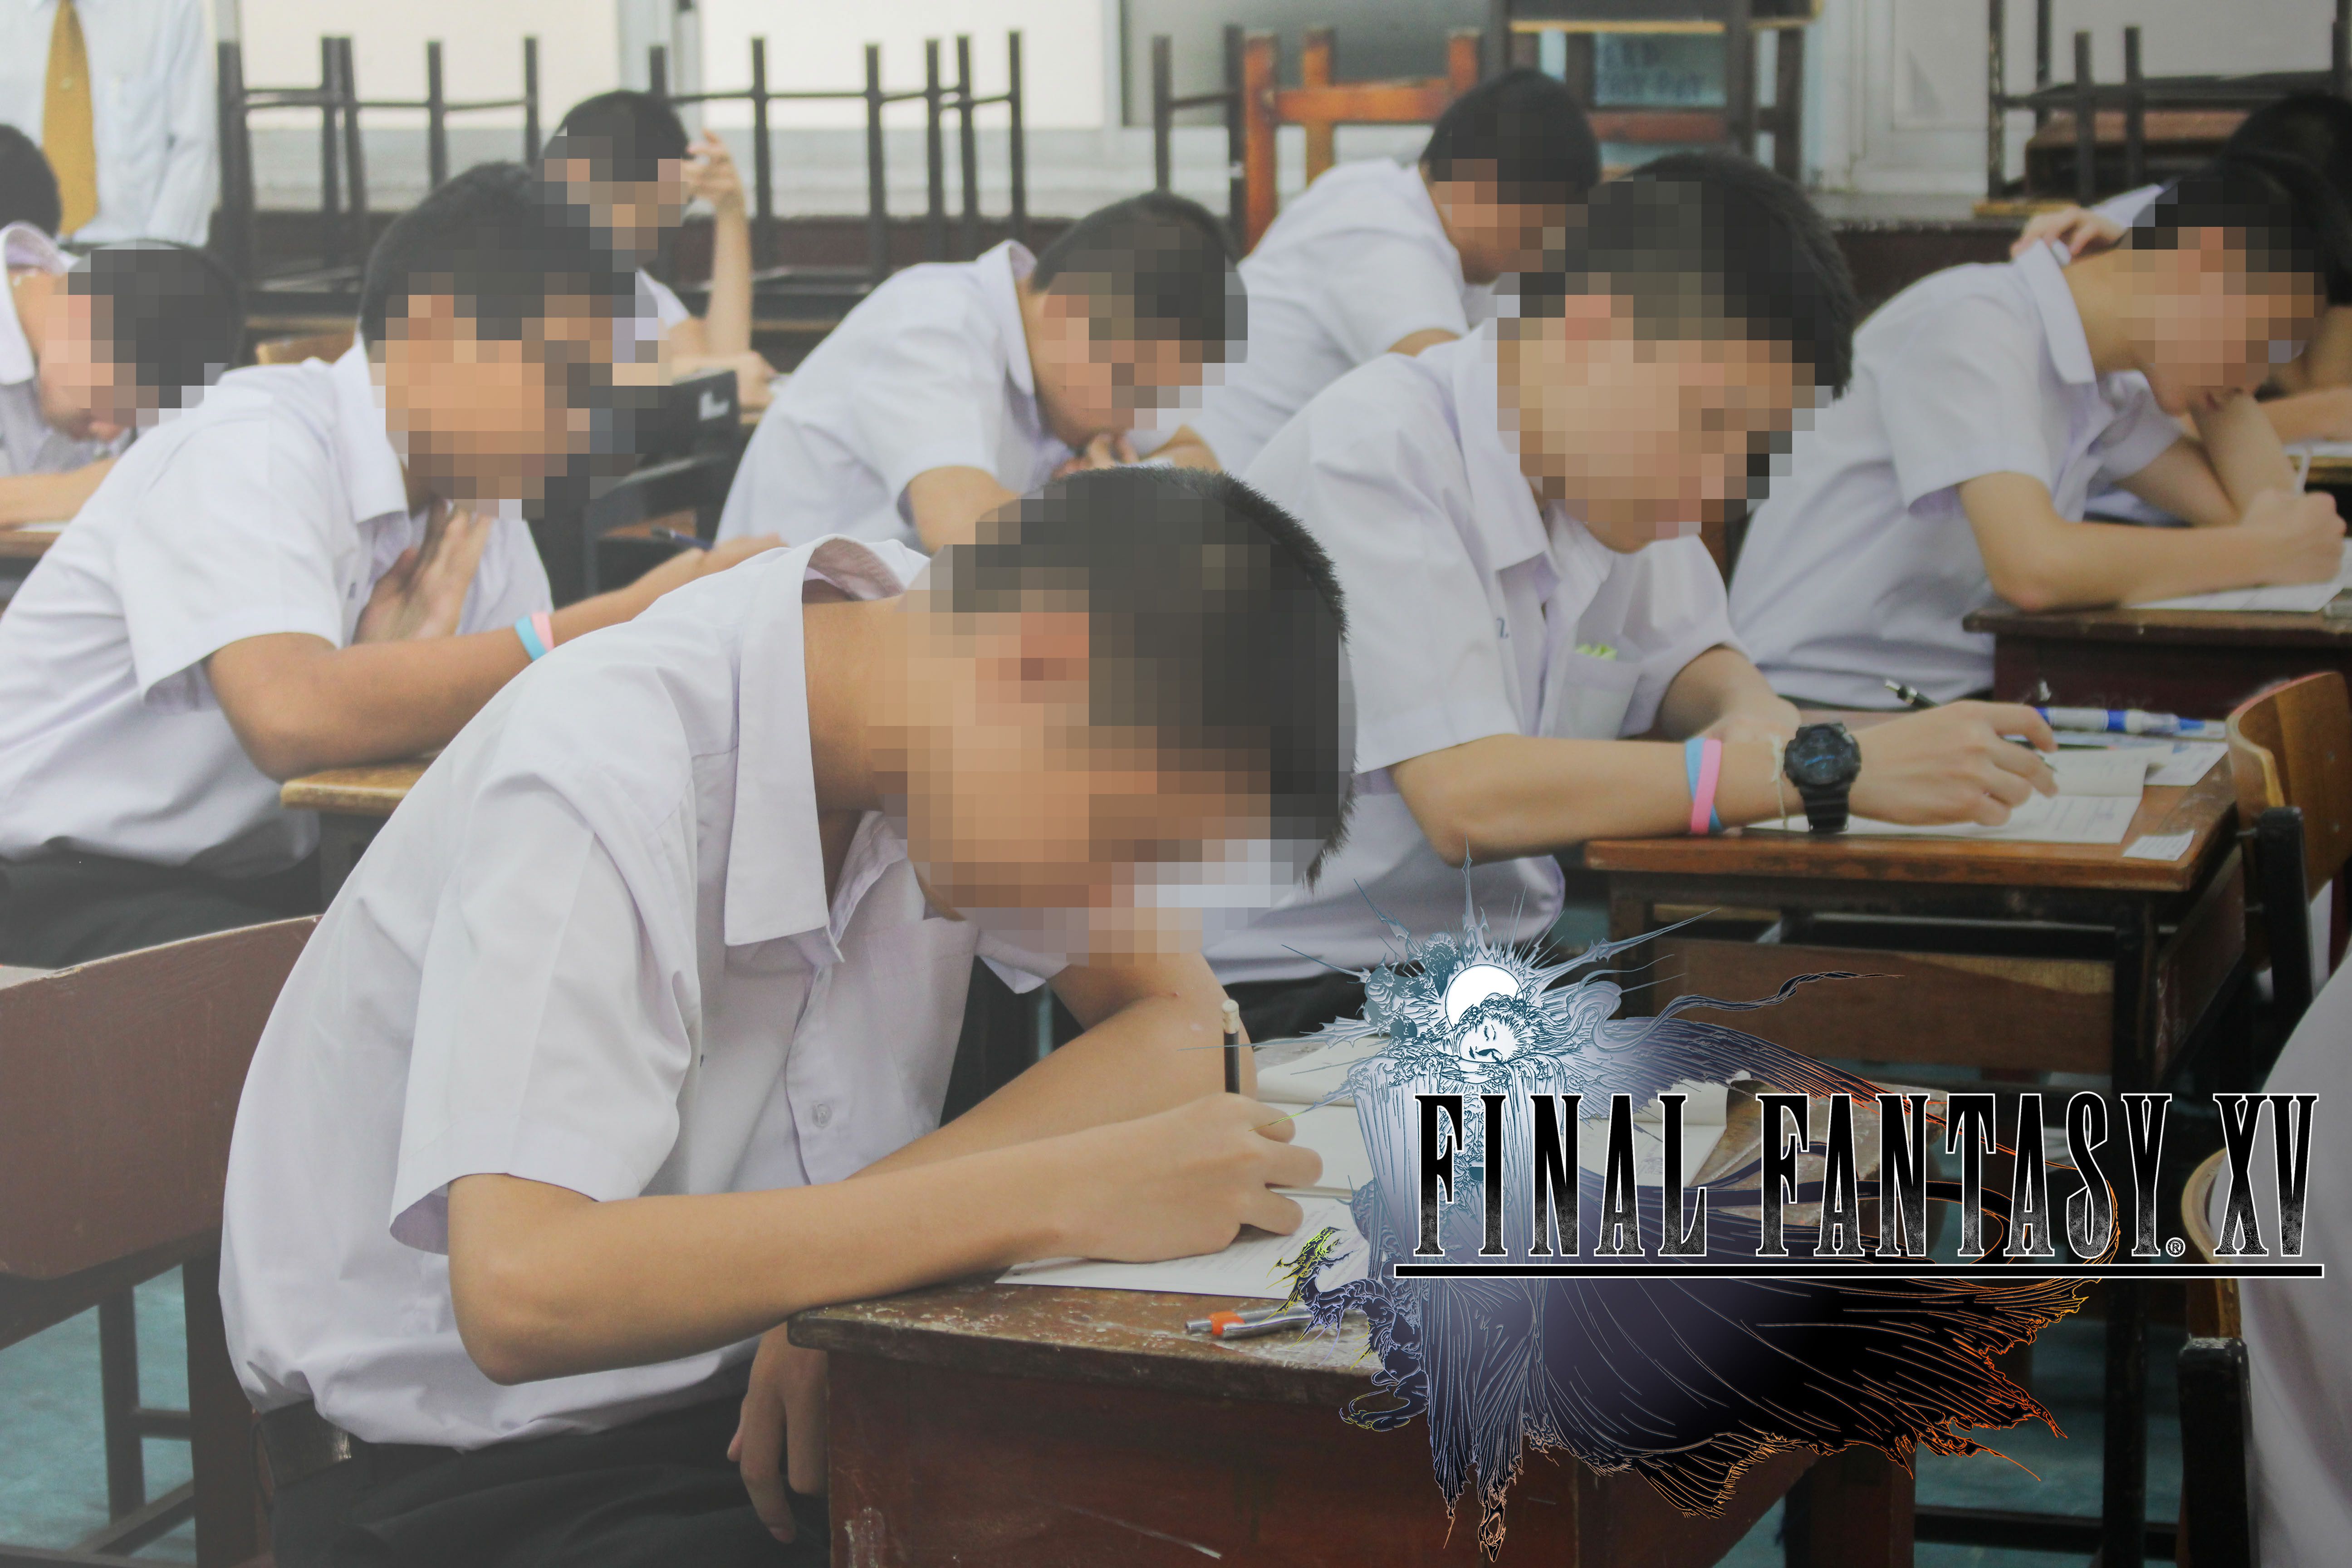 final-exam-fantasy-xv